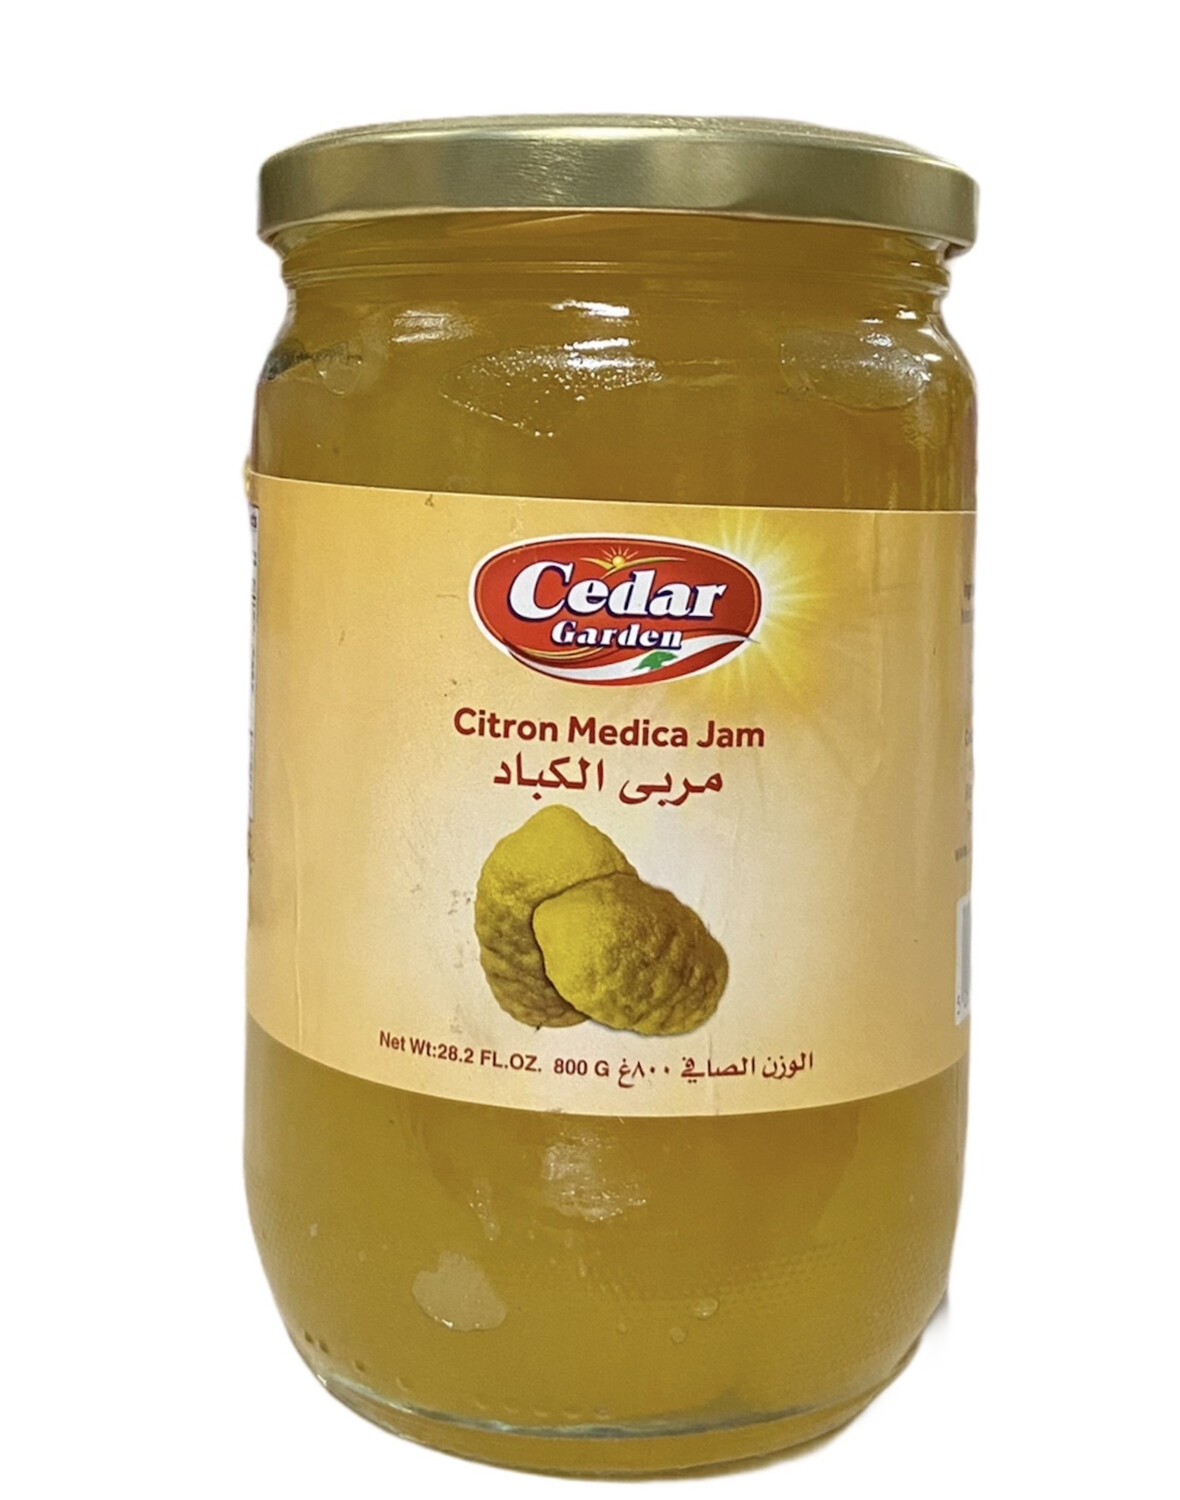 Cedar Garden Citron Medica Jam